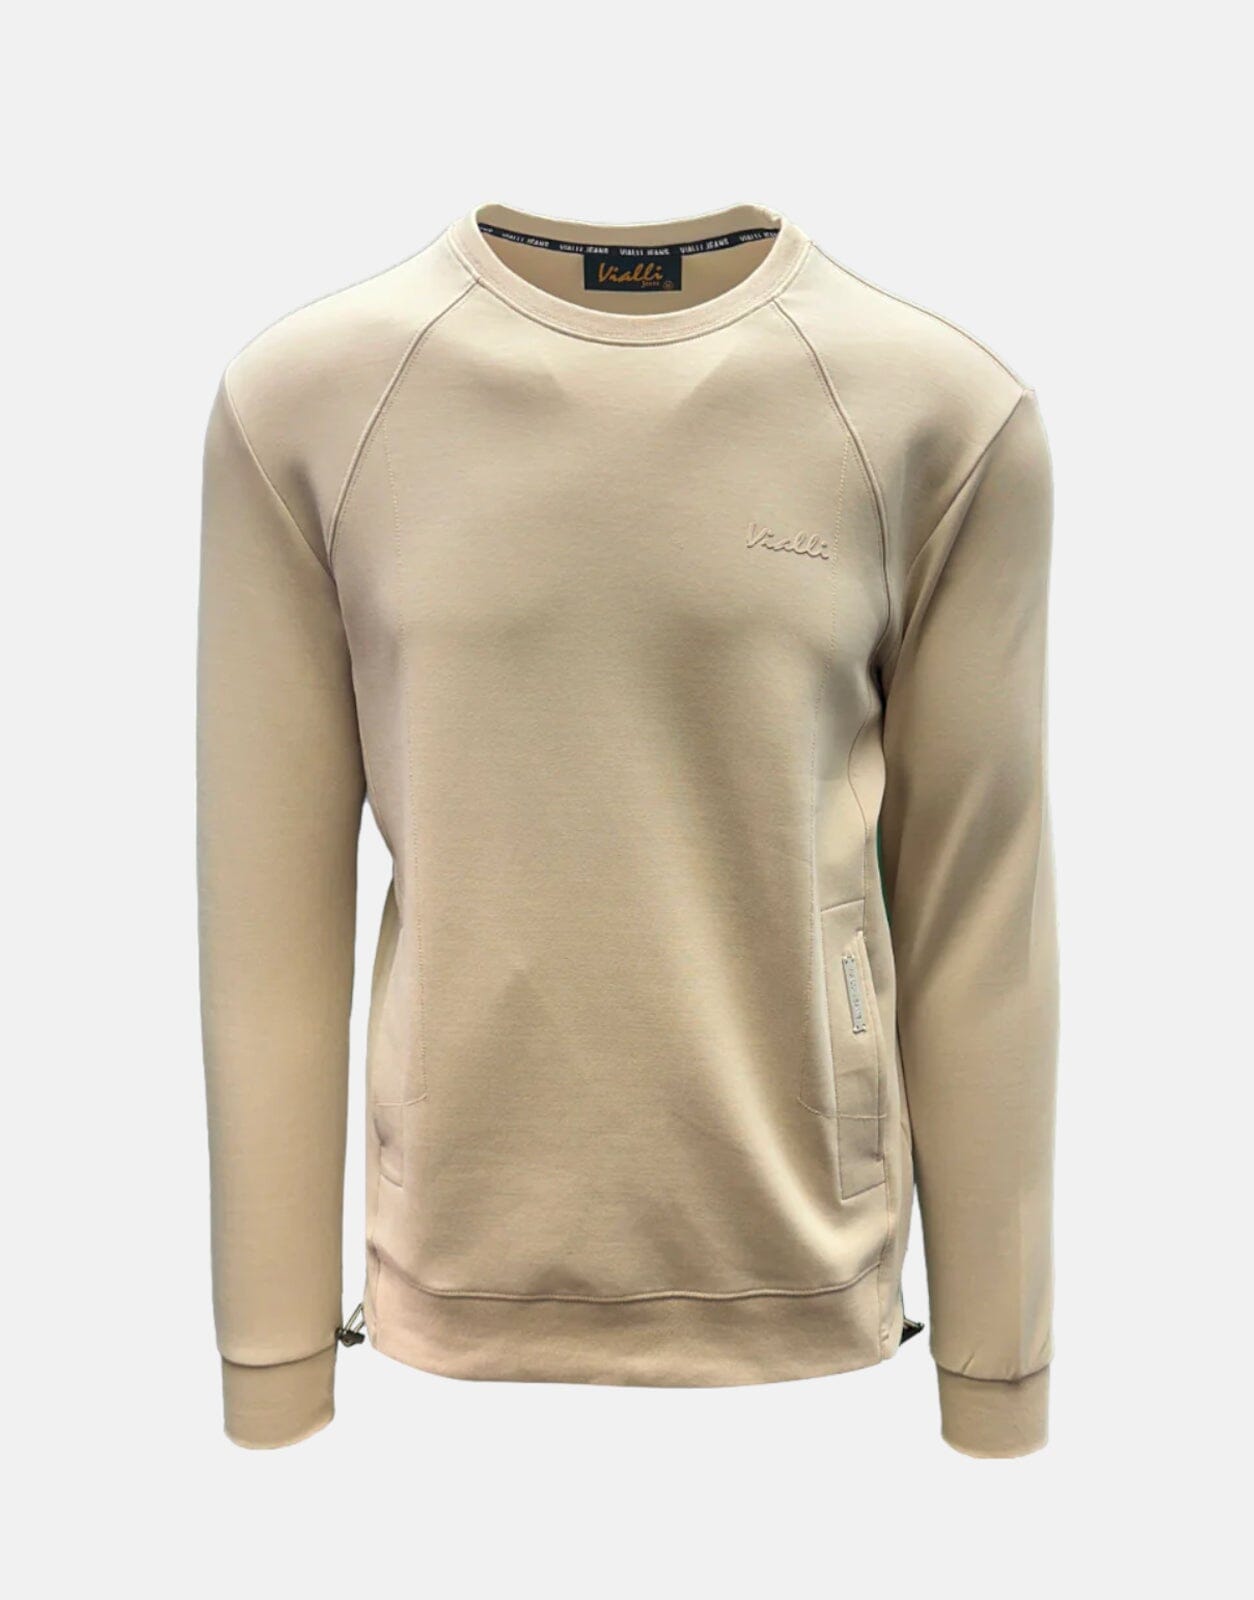 Vialli Declar Beige Sweatshirt - Subwear